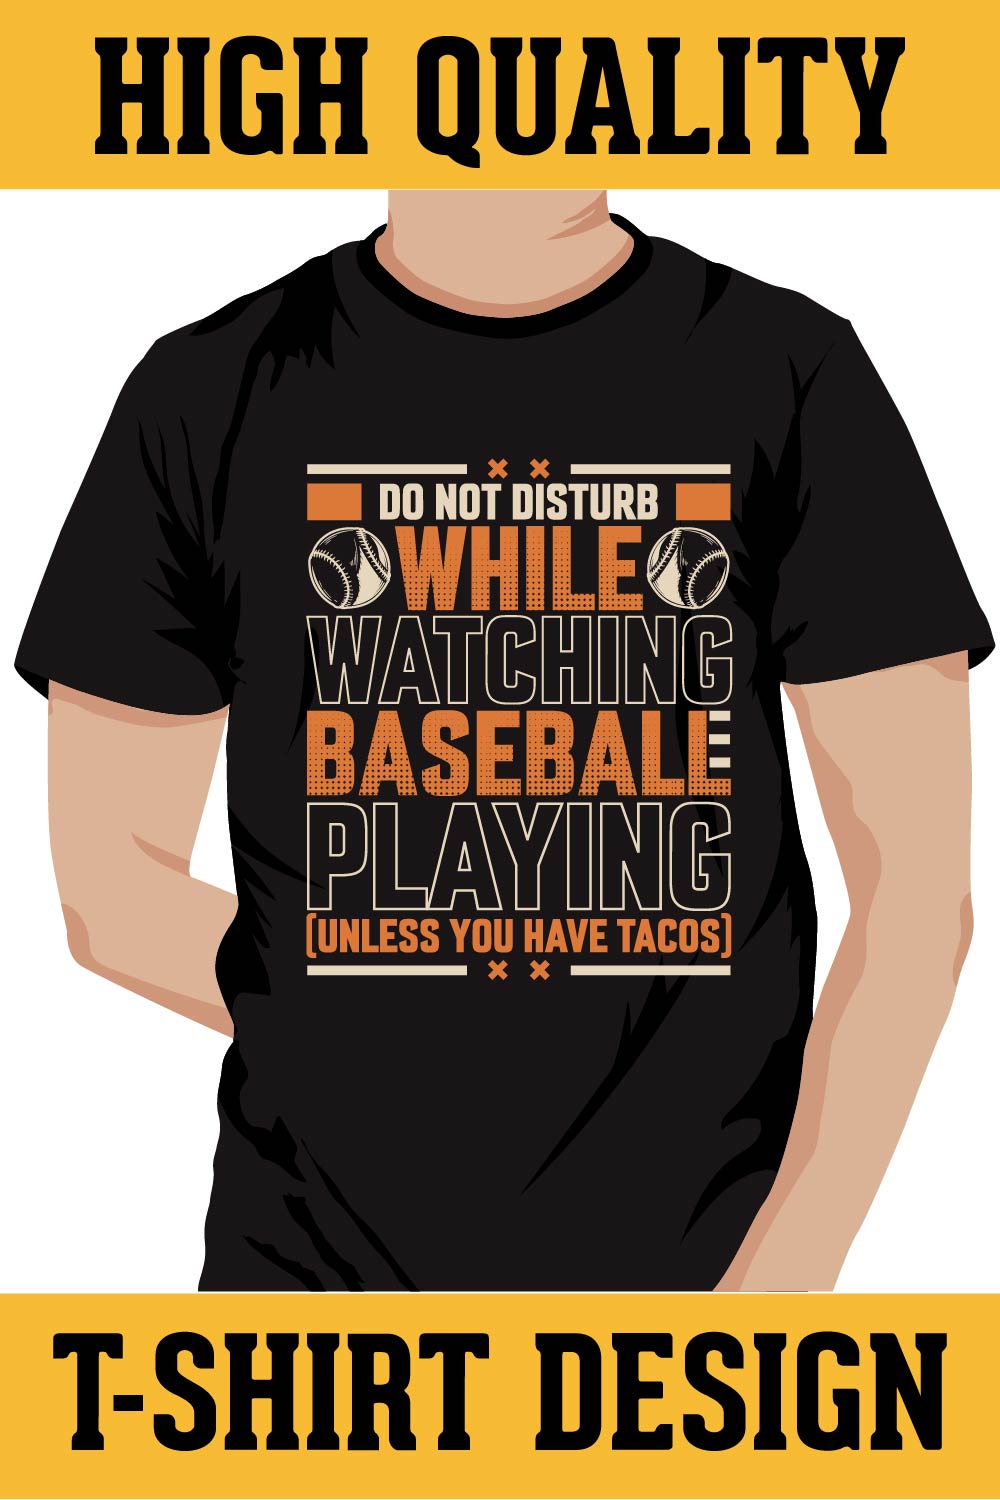 Baseball T-shirt Design, Do not disturb while watching baseball playing pinterest preview image.